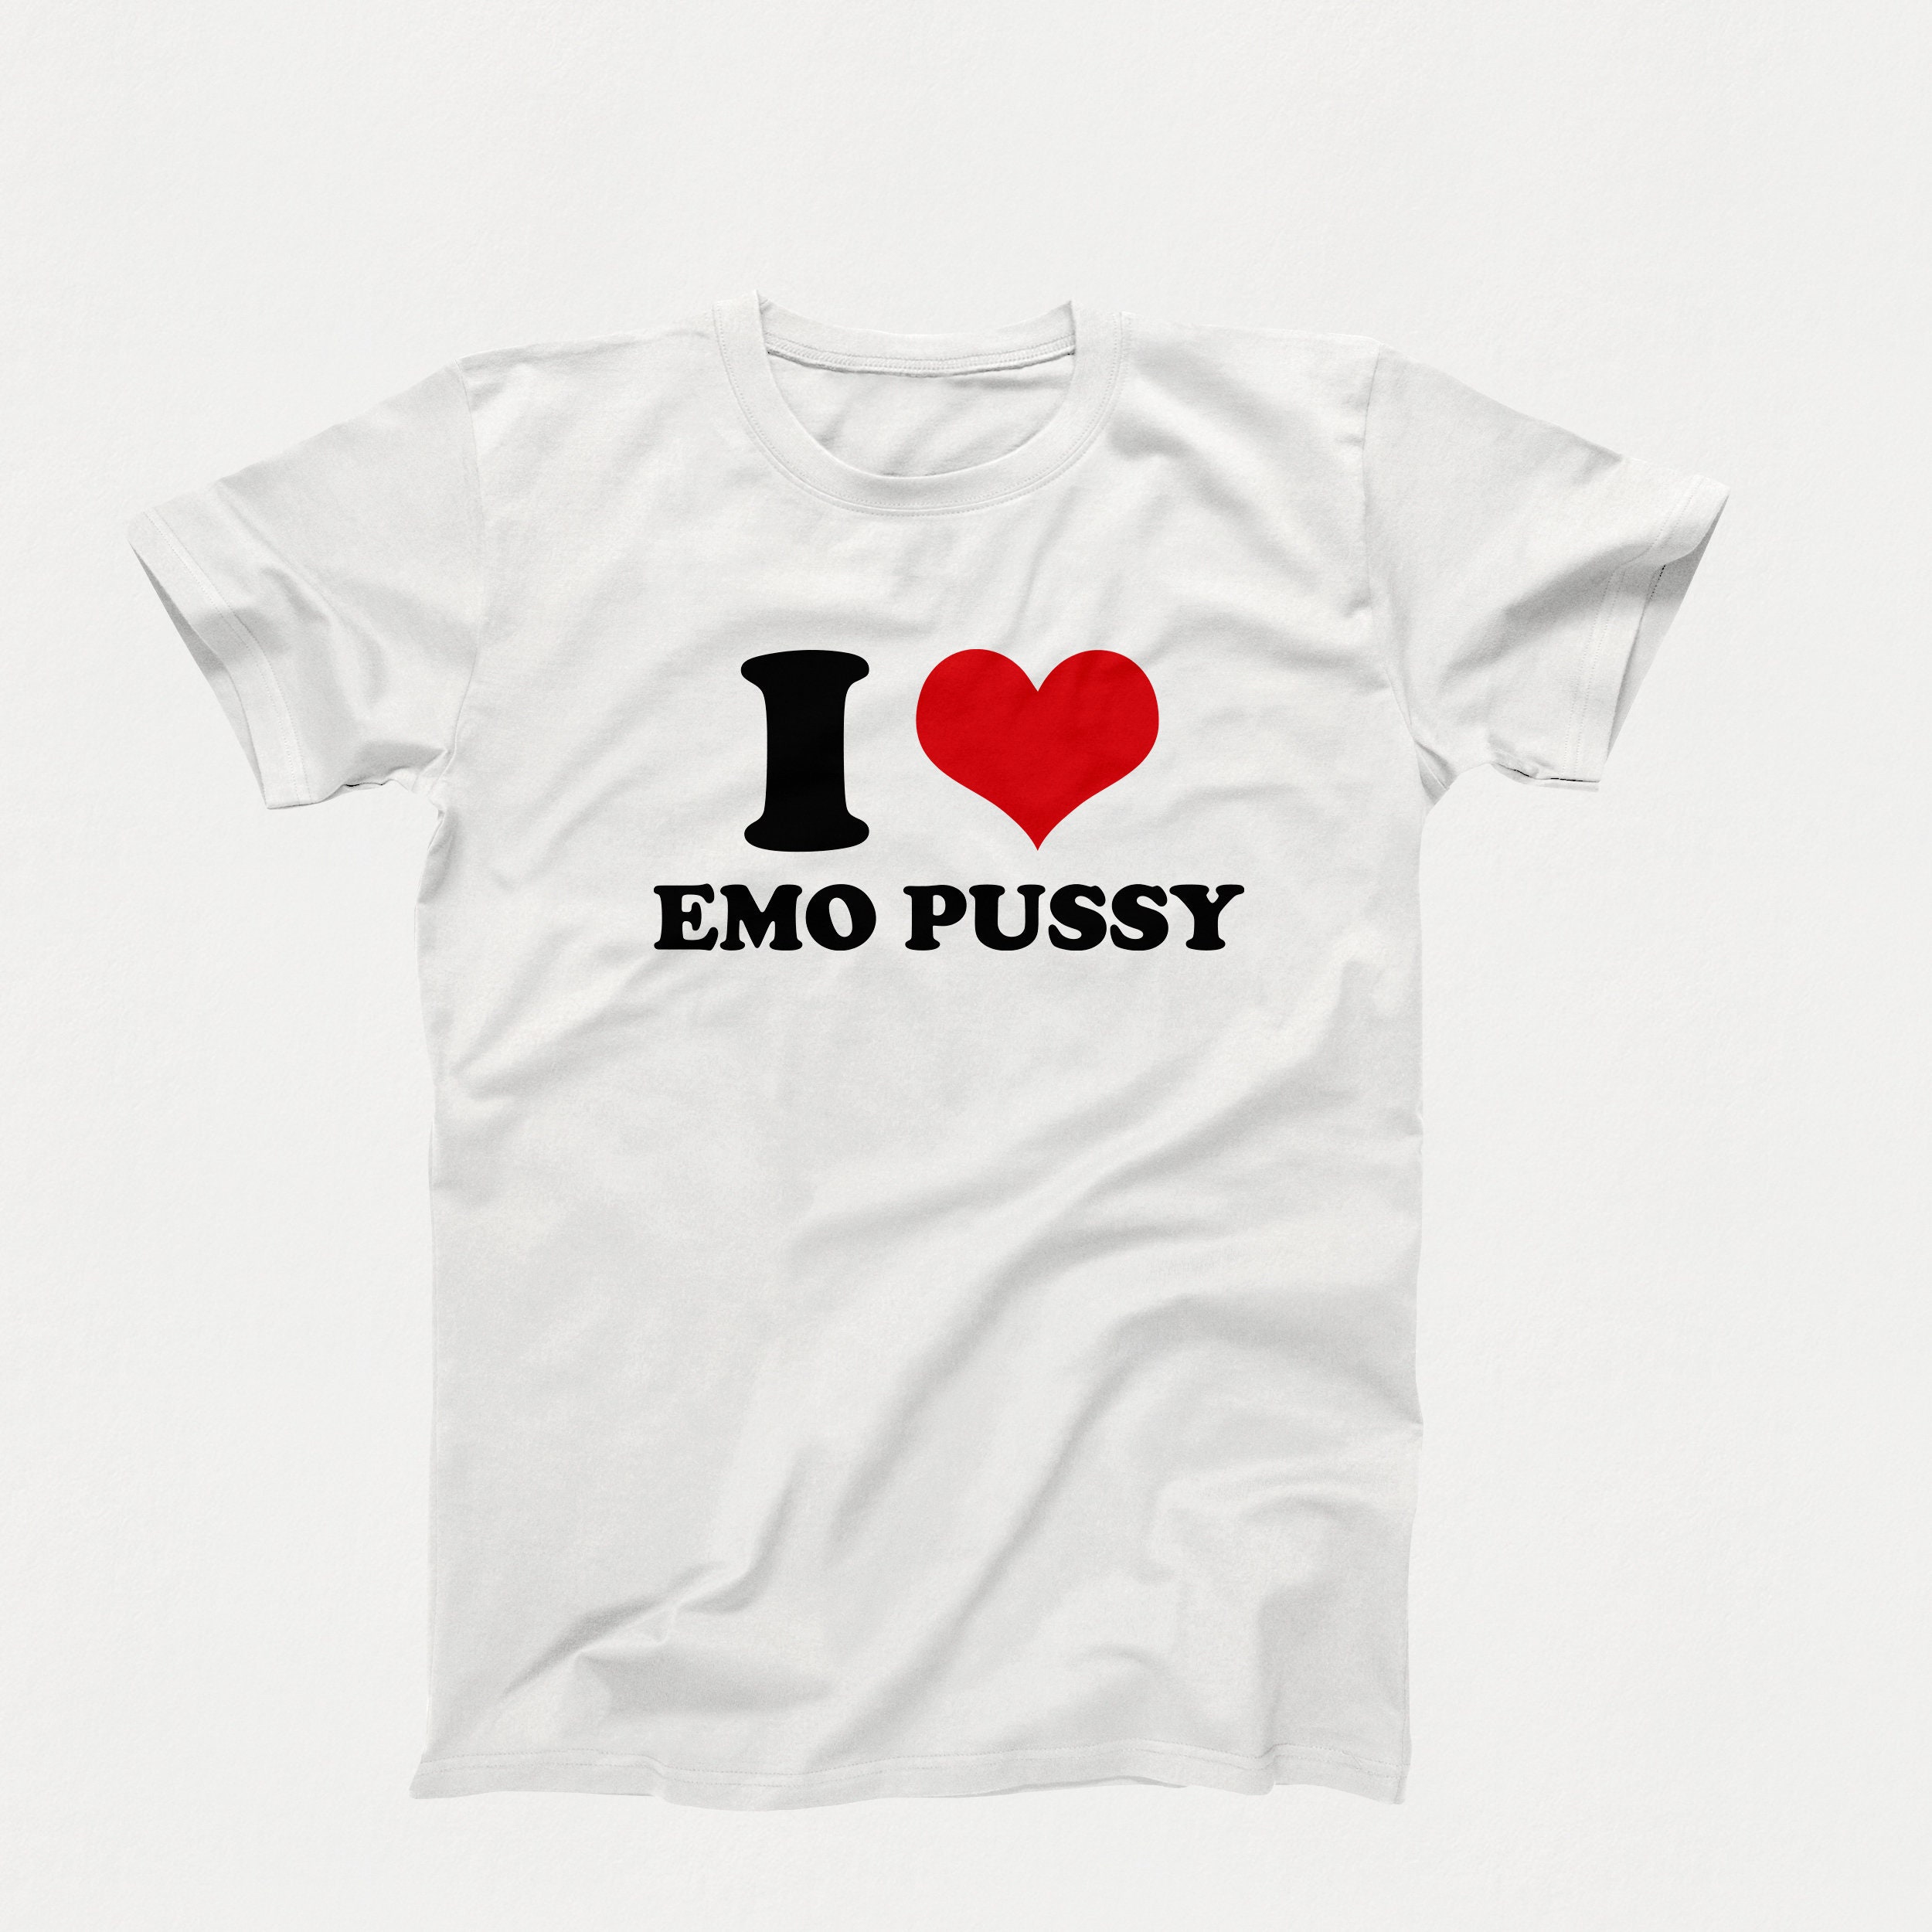 I Heart T-shirt I Love Emo Pussy Shirt I Love Graphic Tees image photo